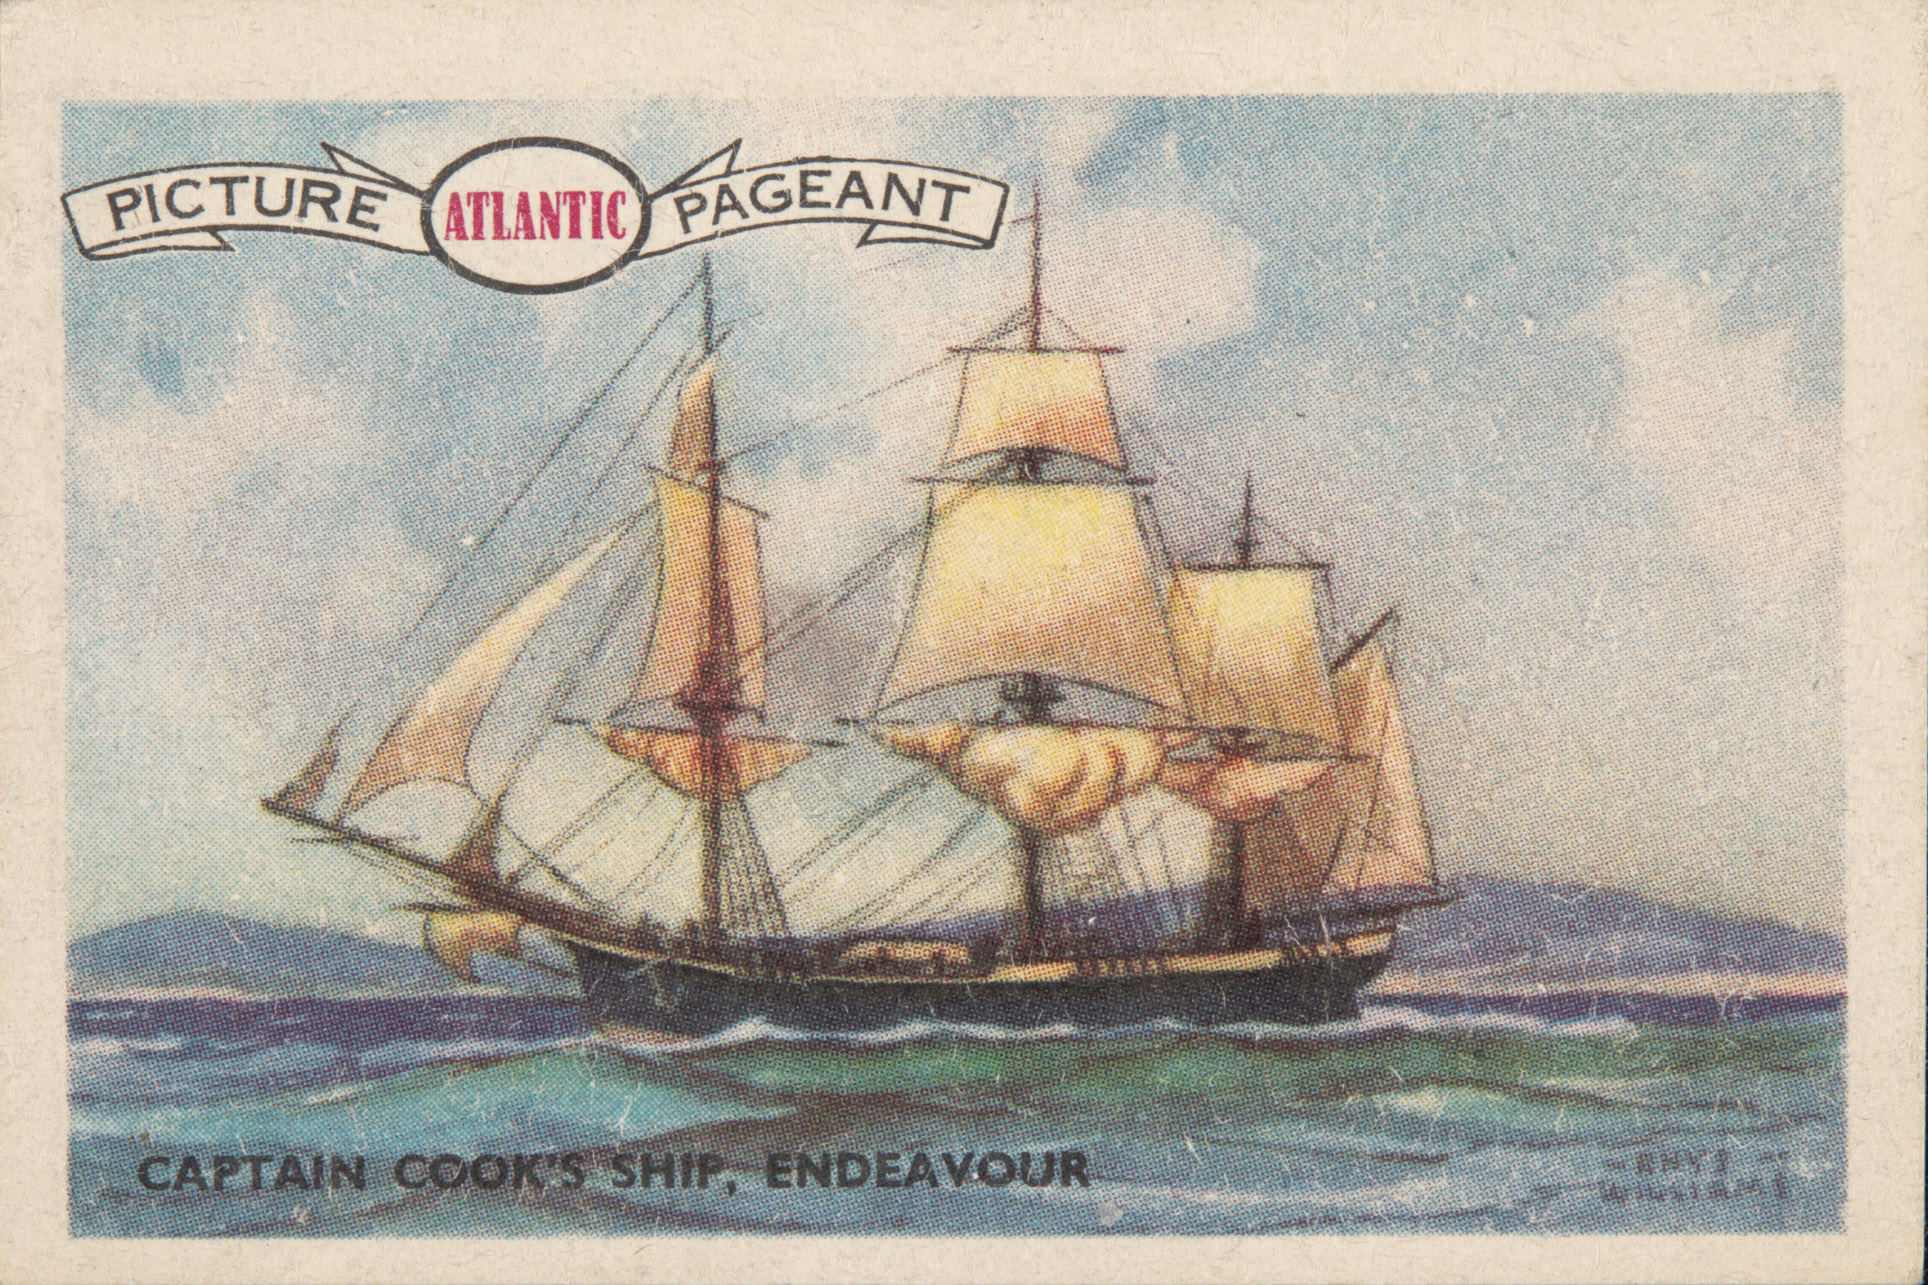 Swap card (1950s) titled ‘No. 4 - Captain Cook’ ship Endeavour’.